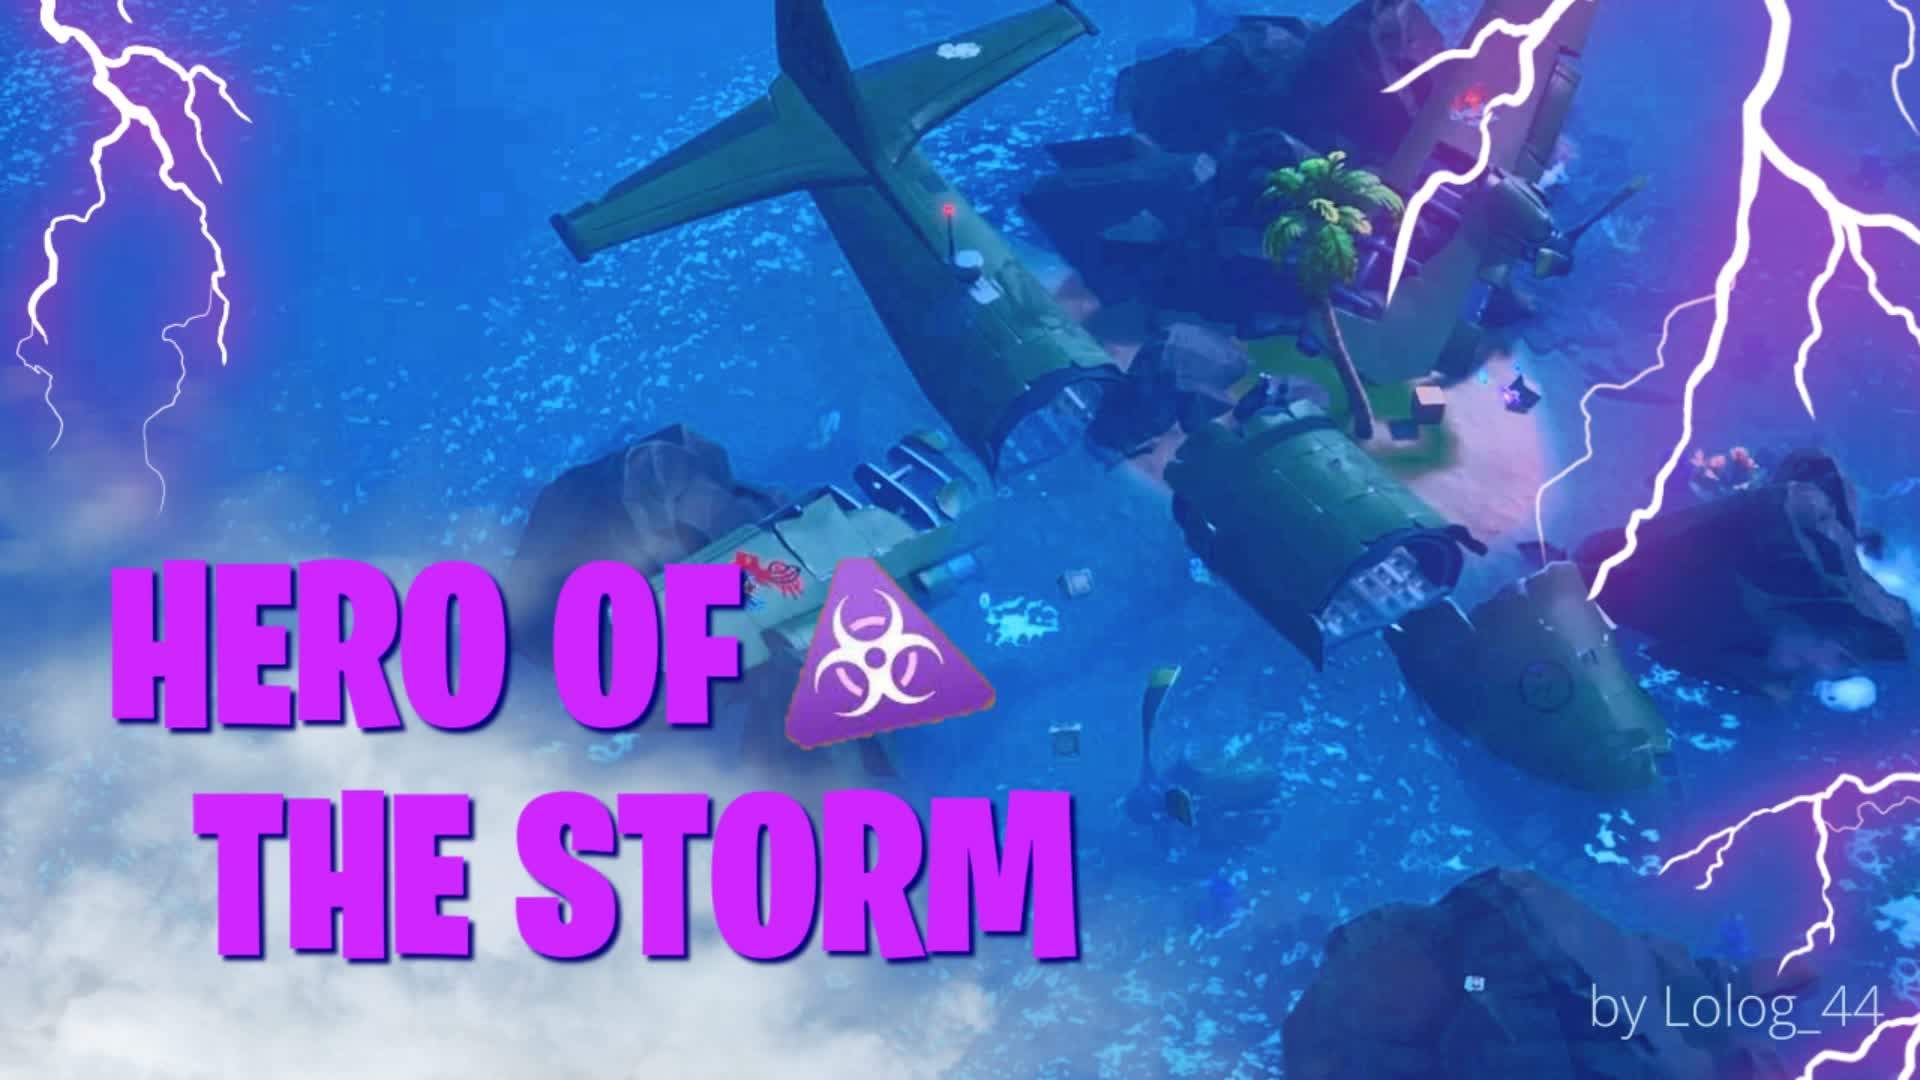 Hero of the storm